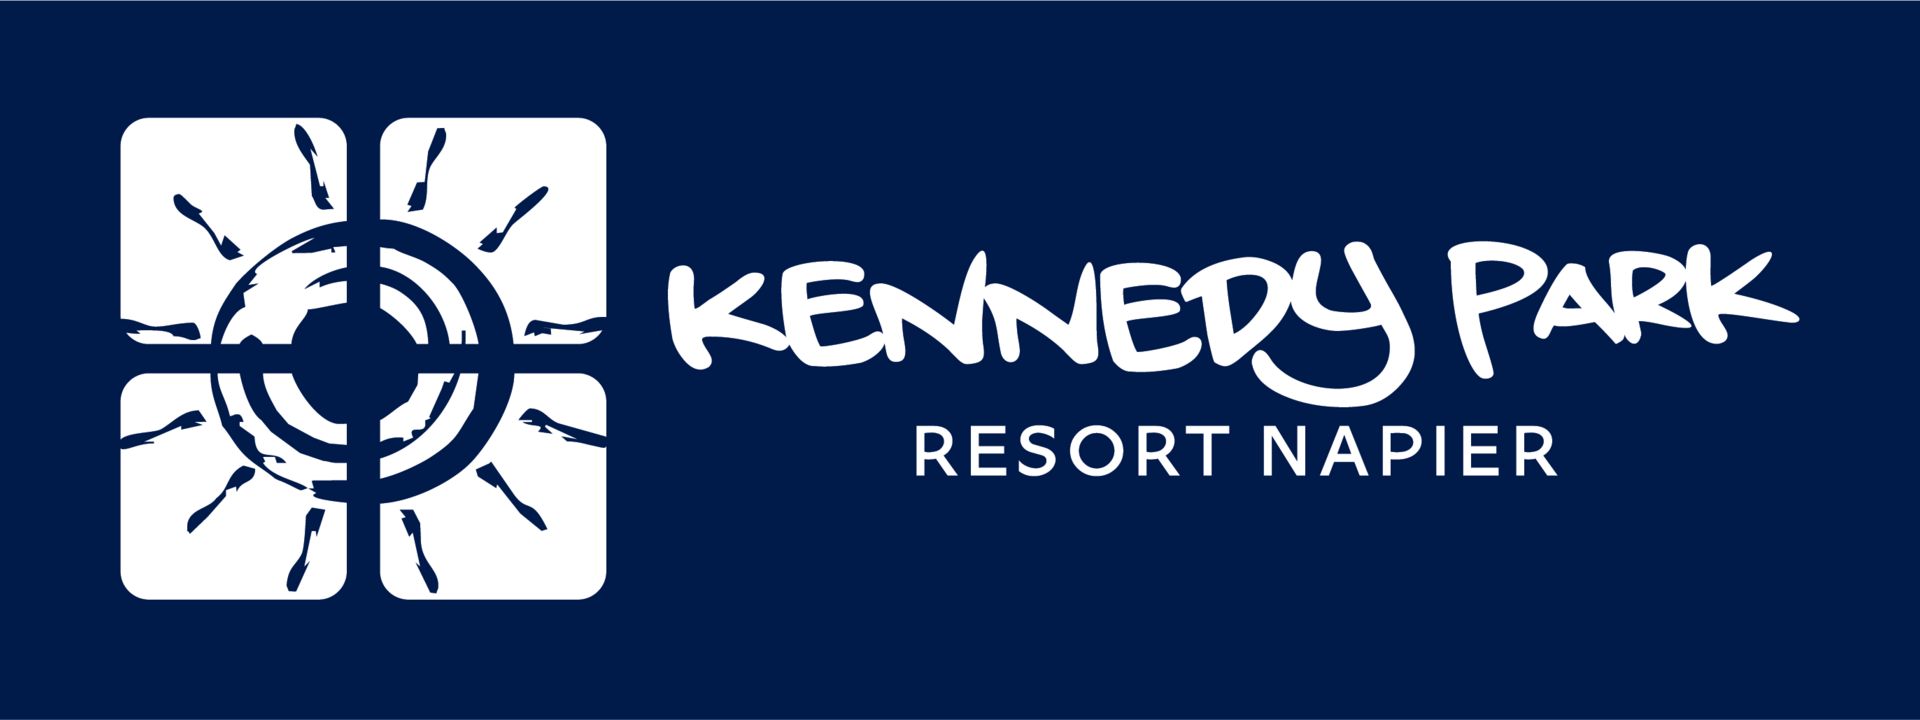 Kennedy Park Resort Napier landscape (White on Blue)-01.png